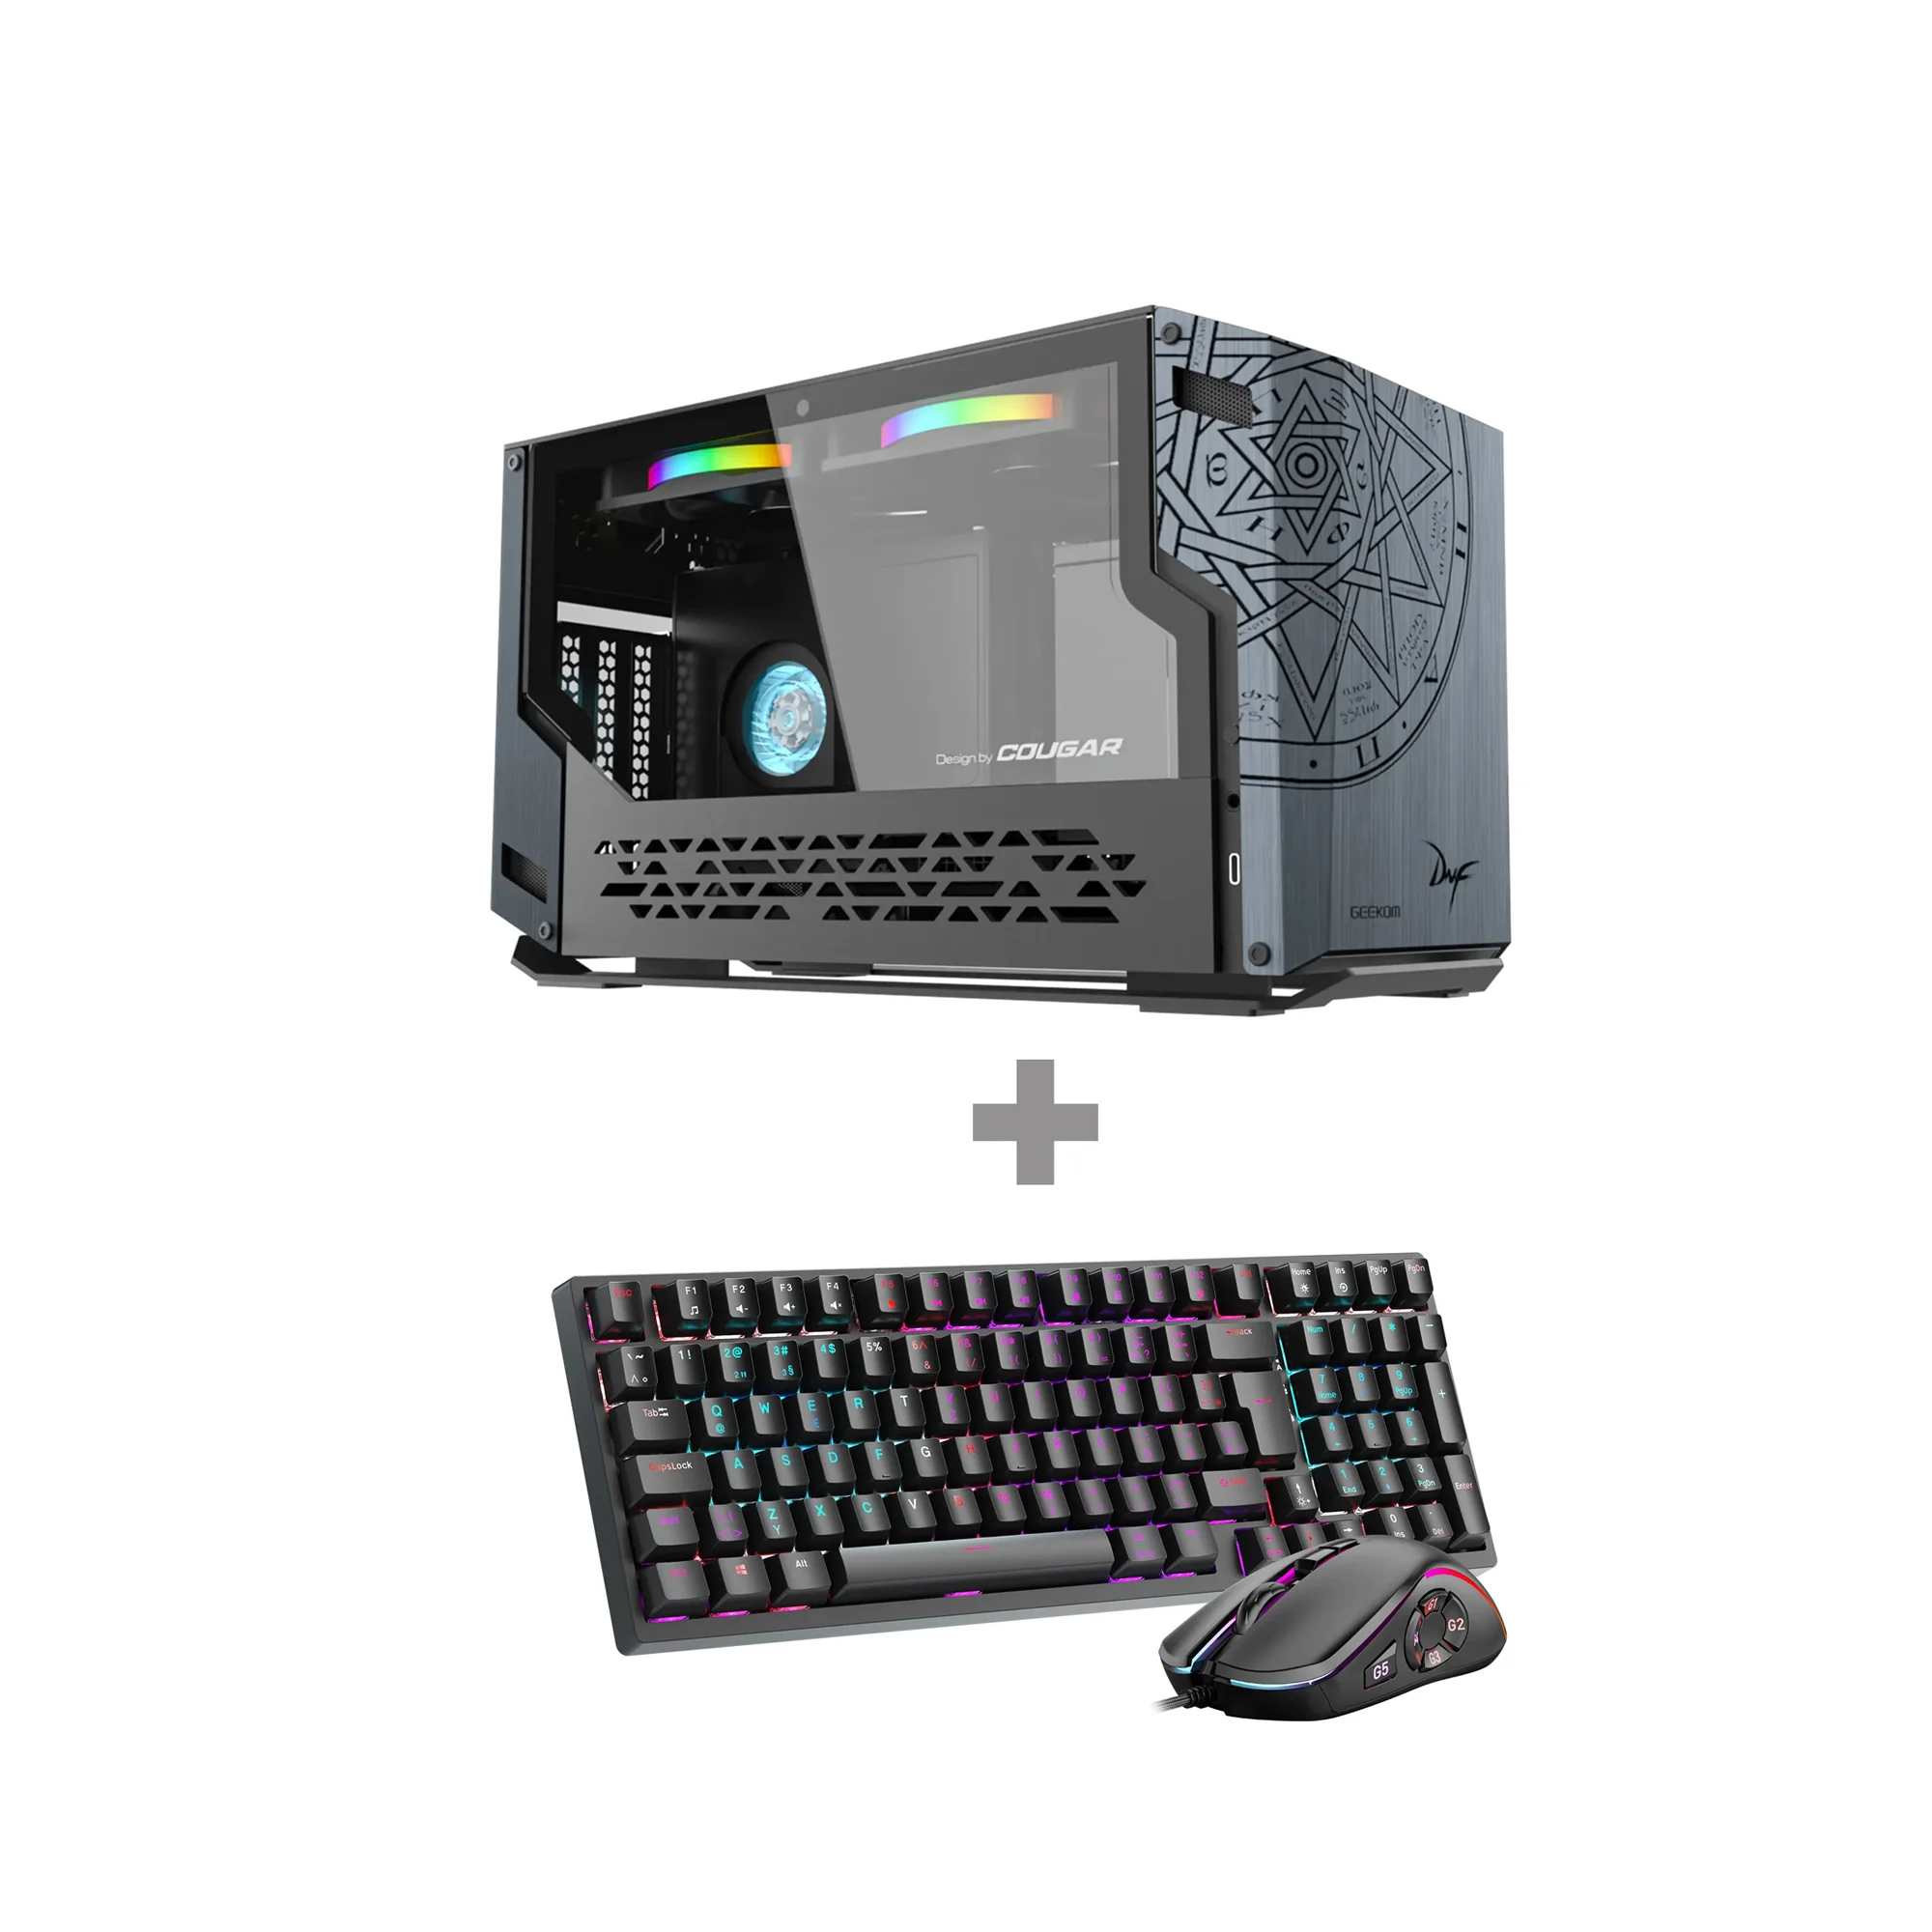 GEEKOM Mini PC: Achat mini ordinateur au meilleur prix!